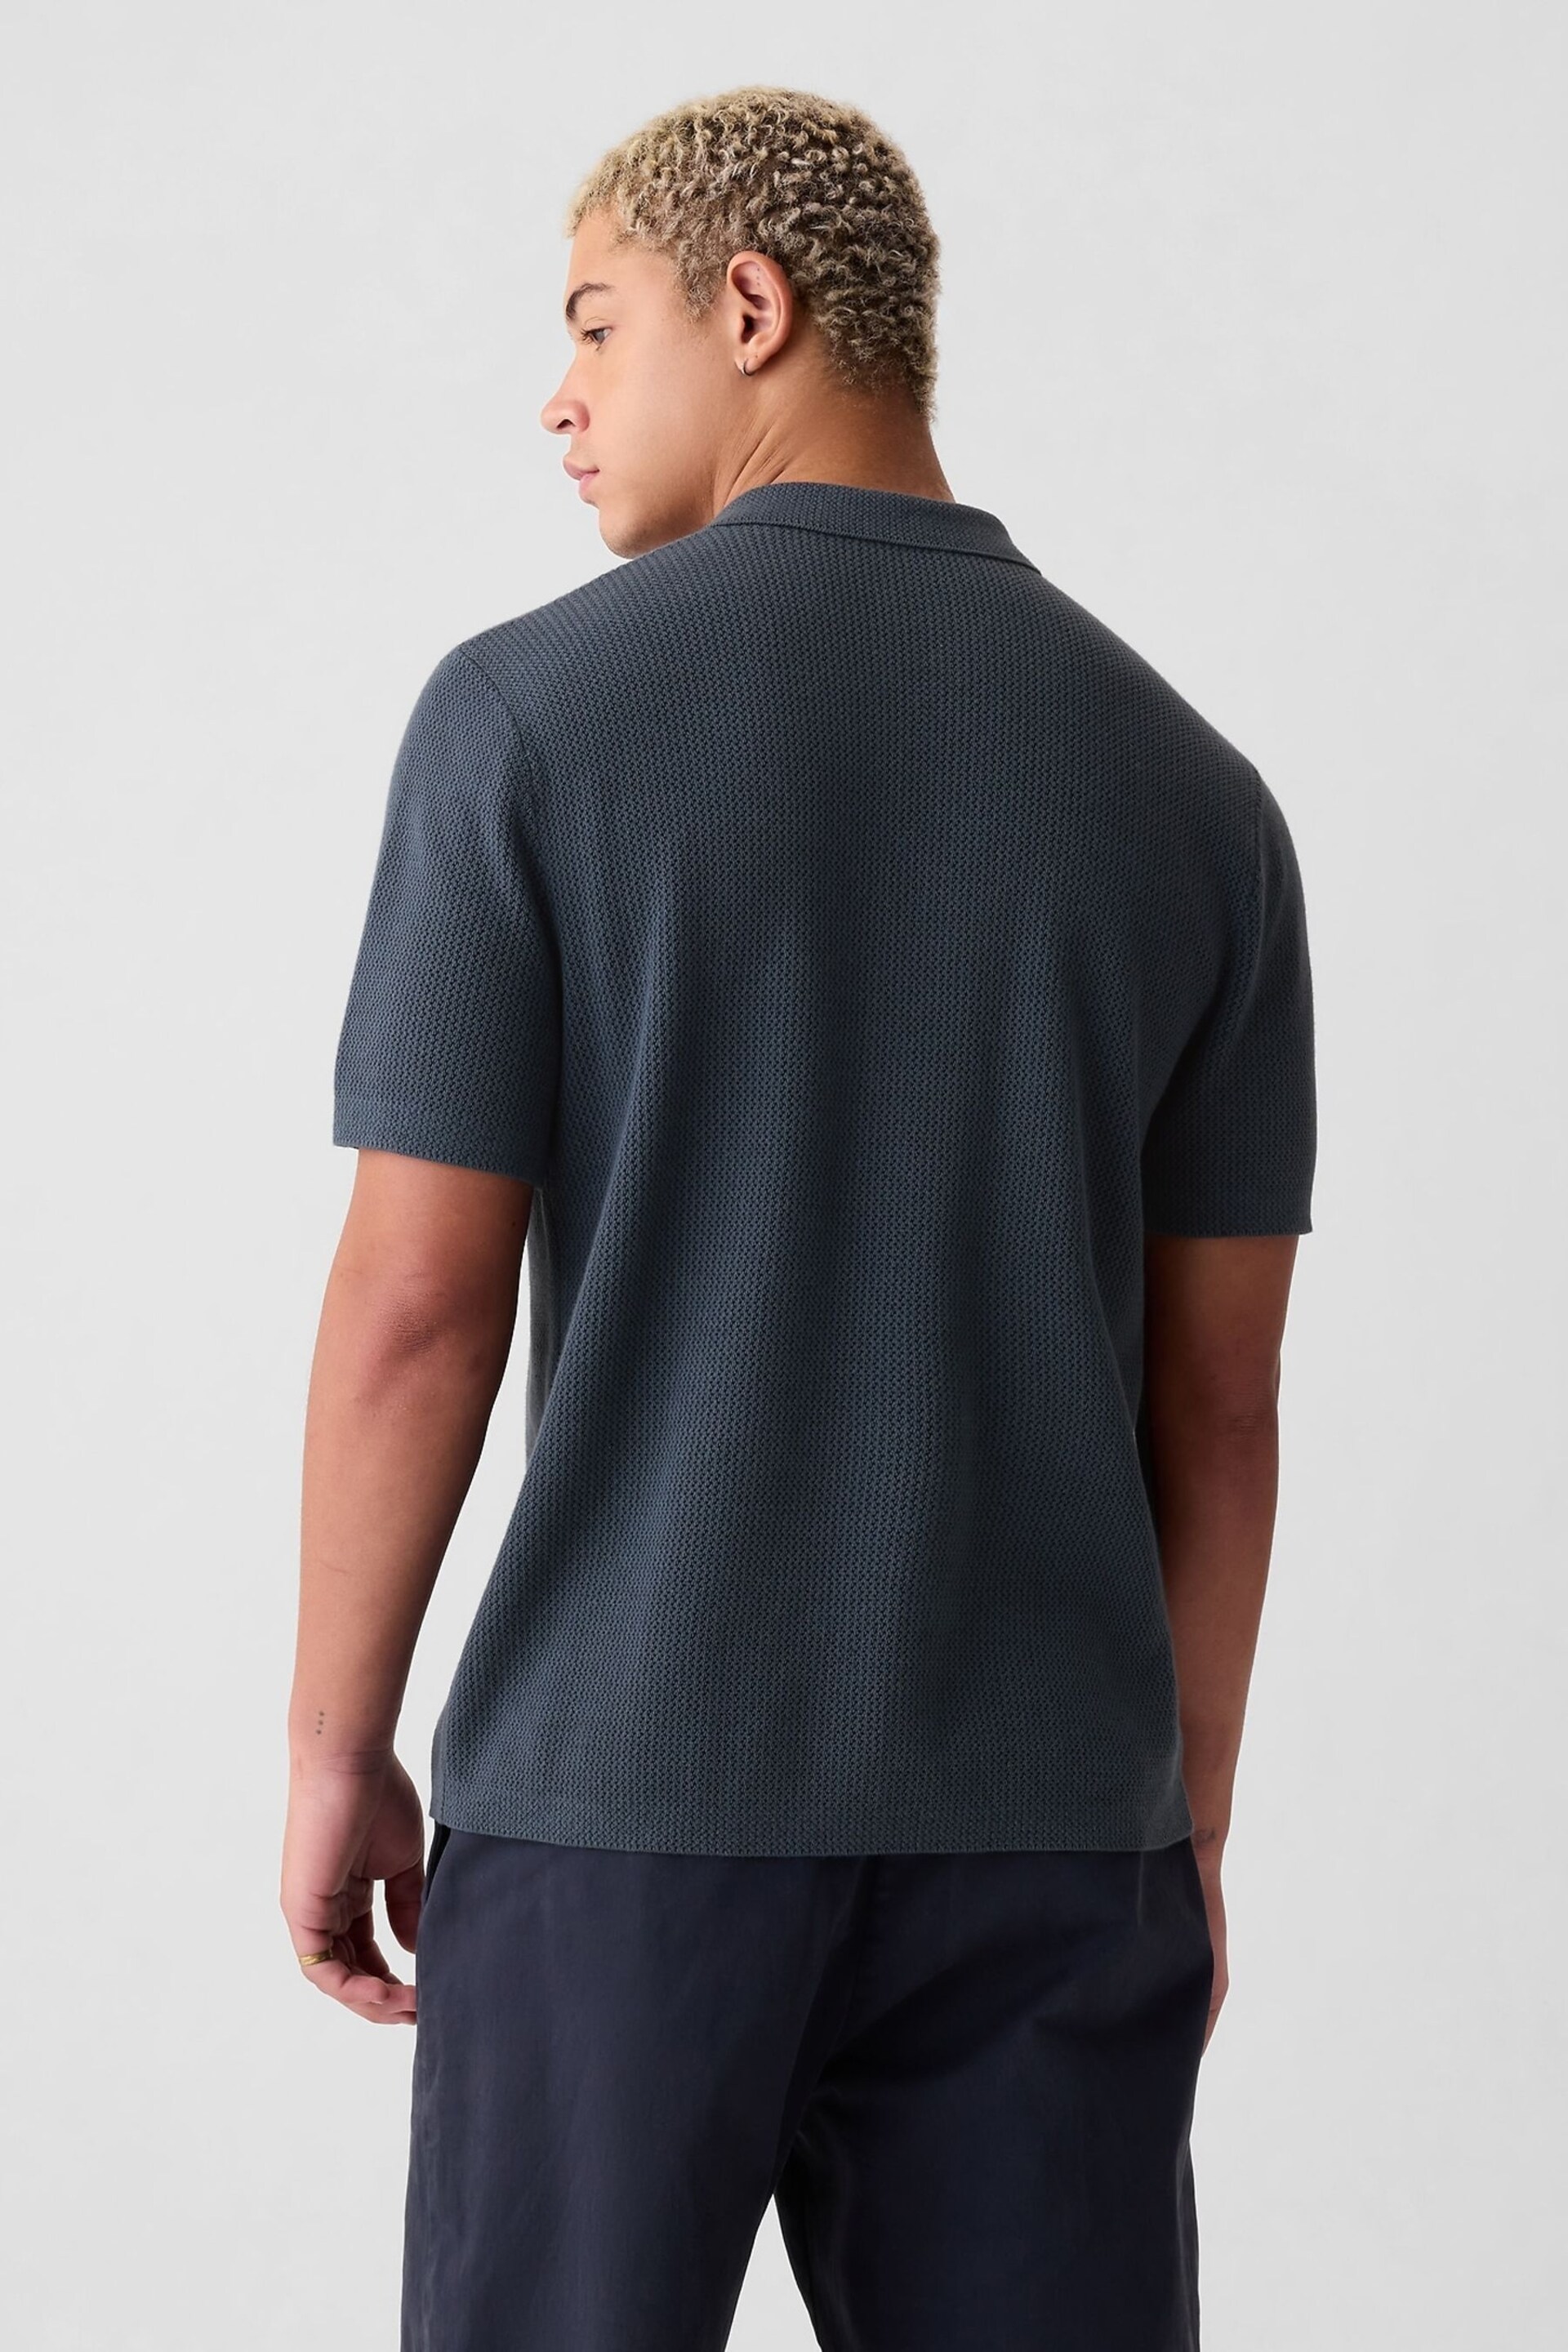 Gap Blue Cotton Textured Short Sleeve Polo Shirt - Image 2 of 4